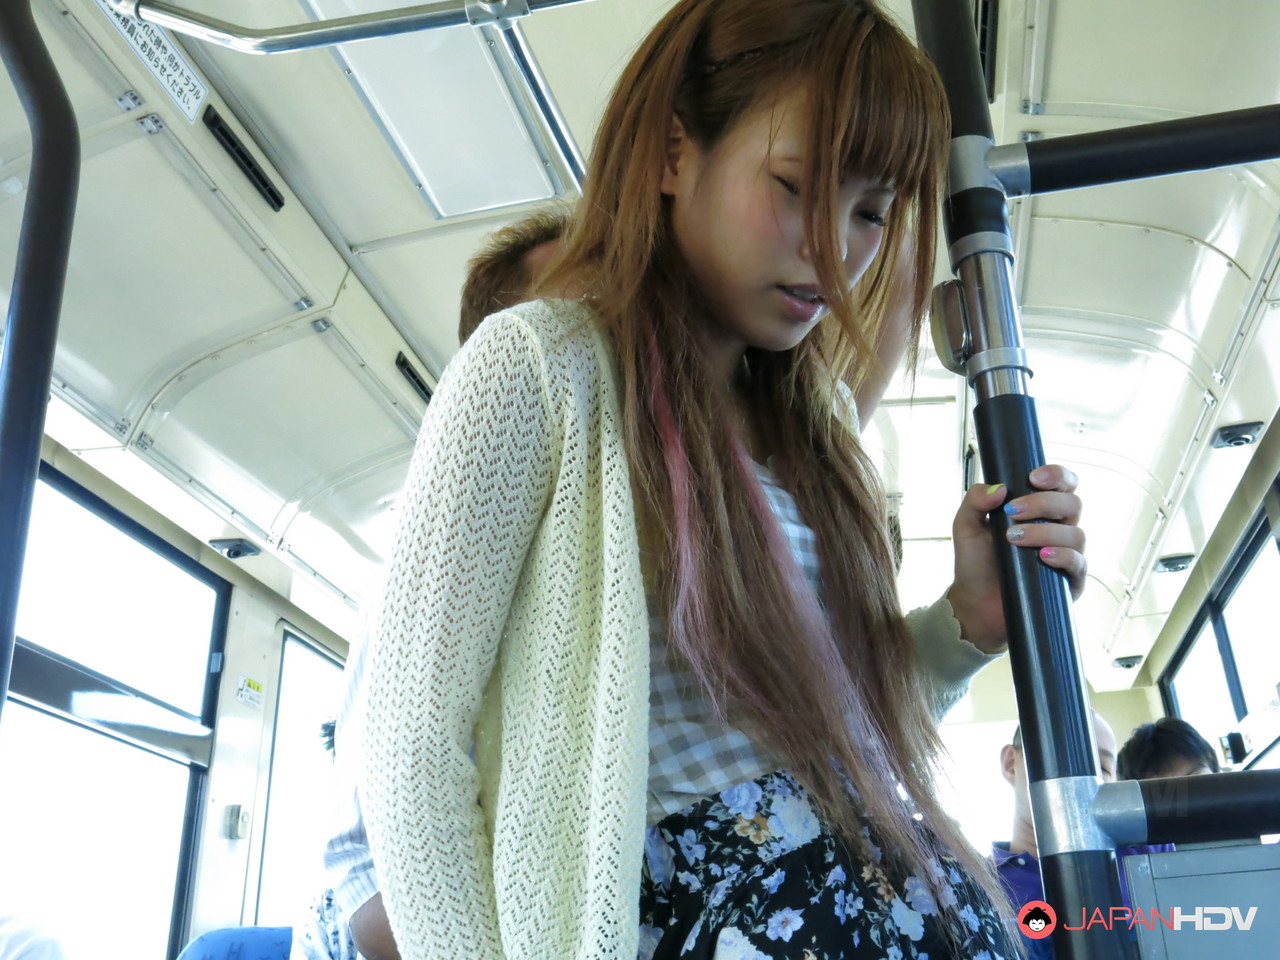 Japanese teen Marin Yuuki gets fucked by a bunch of passengers on the bus порно фото #424345720 | Japan HDV Pics, Marin Yuuki, Gangbang, мобильное порно